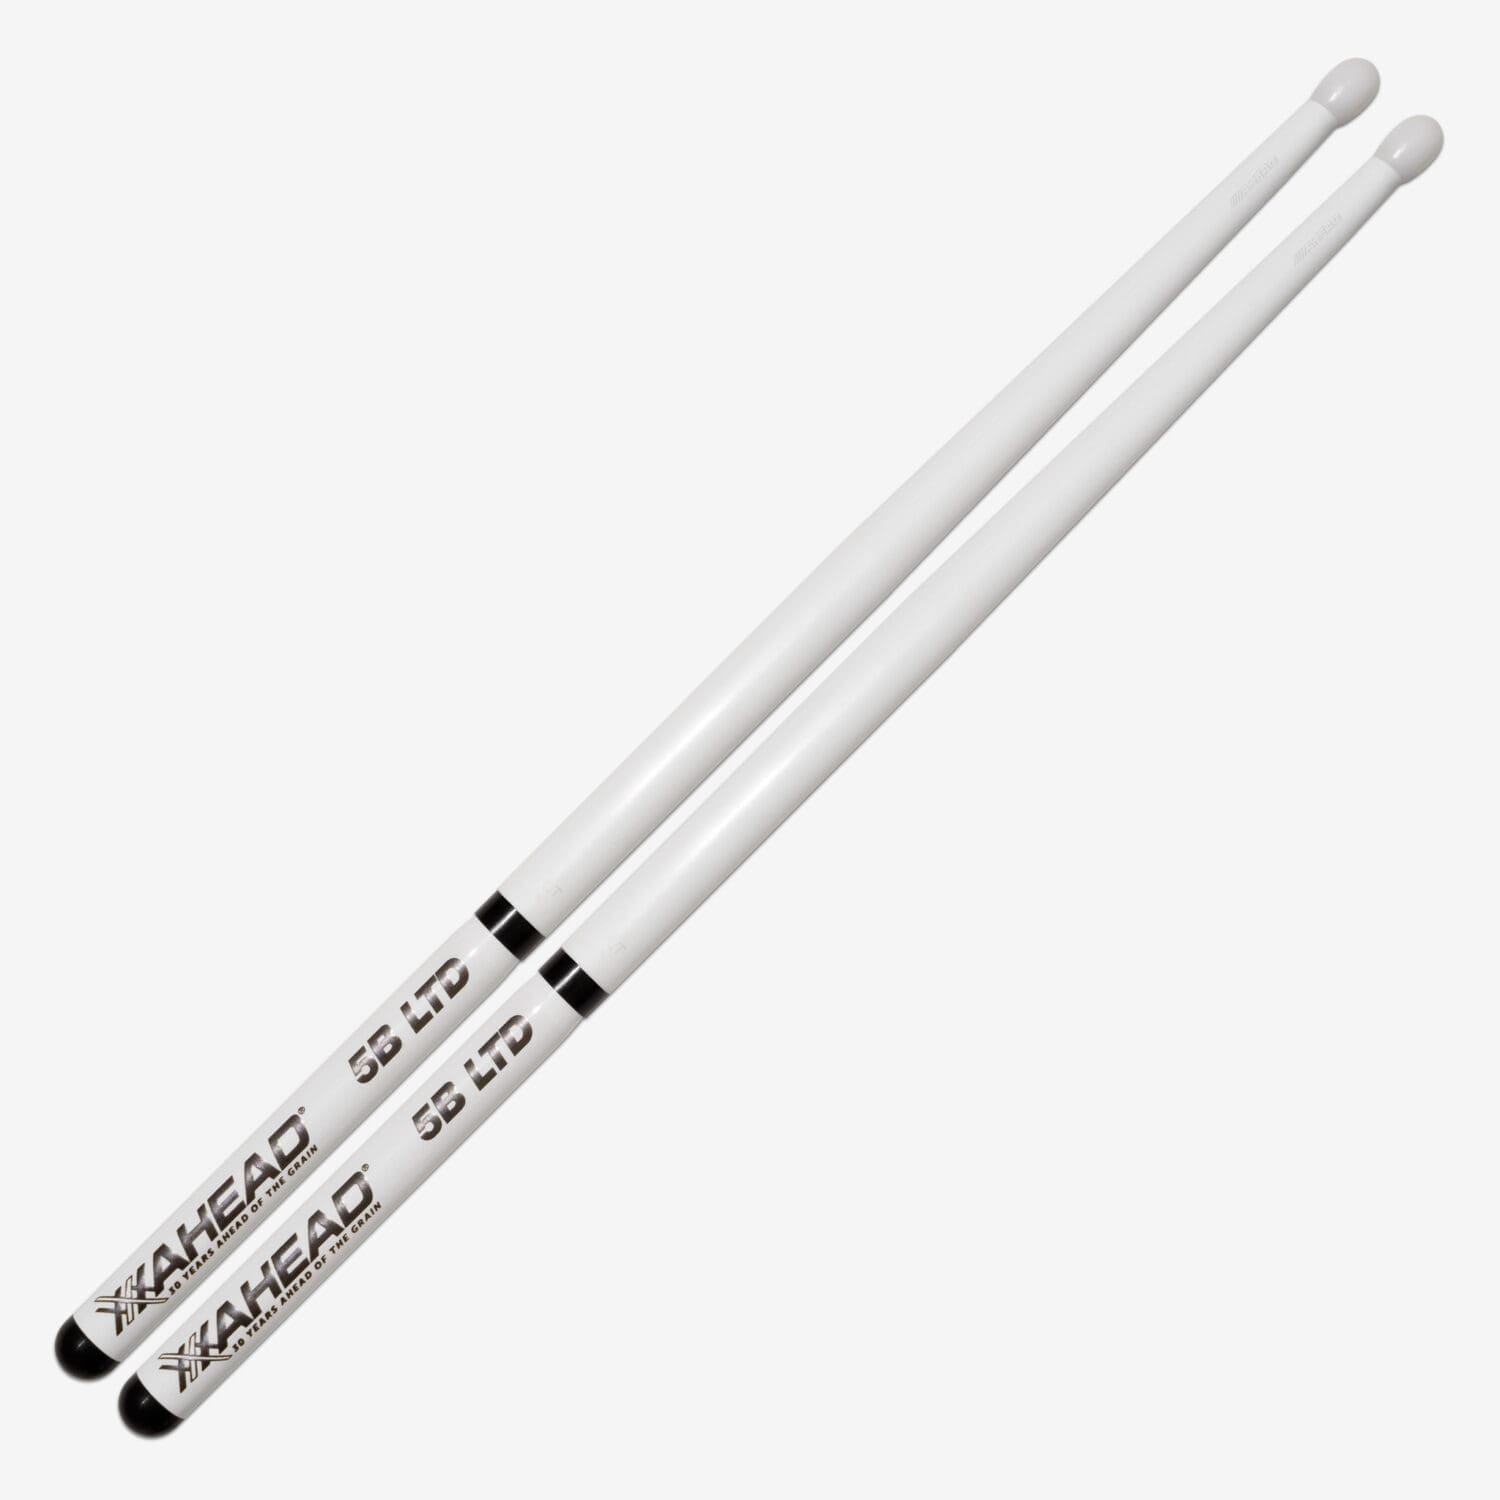 30th Anniversary Limited Edition 5B Drumsticks